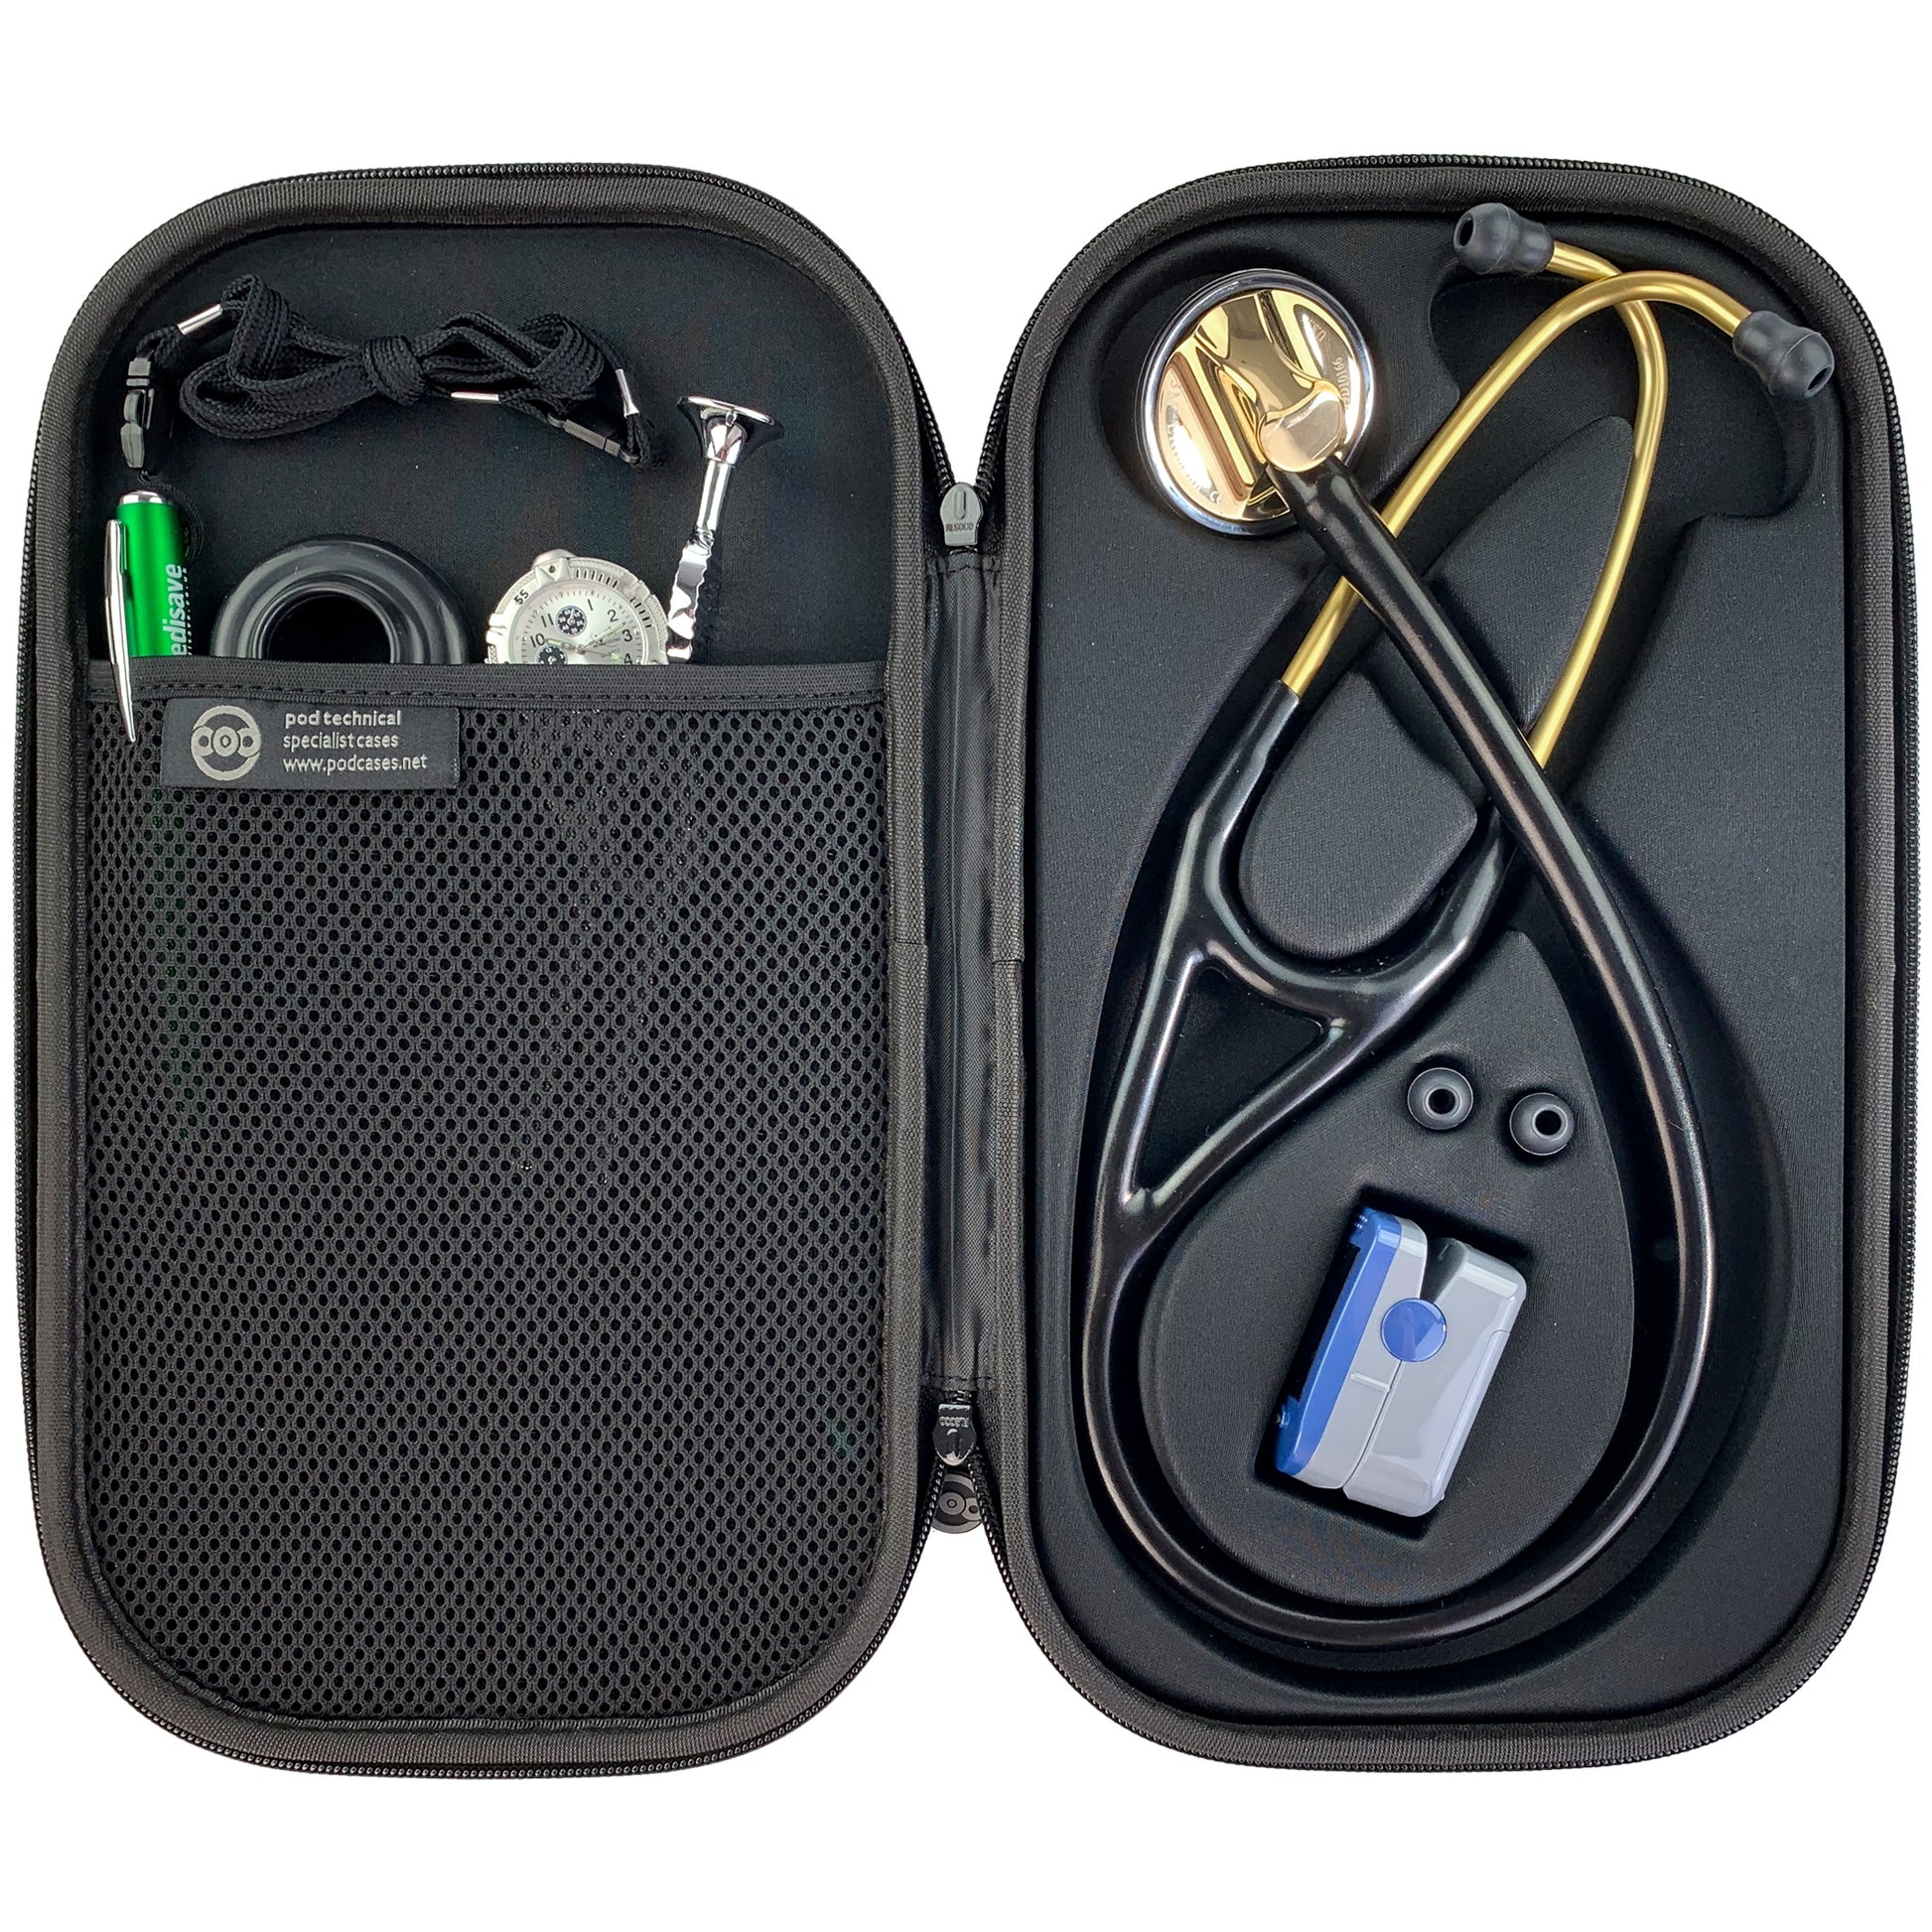 Pod Technical Cardiopod II Stethoscope Case for all Littmann Stethoscopes - Carbon  Pod Technical Specialist Cases   